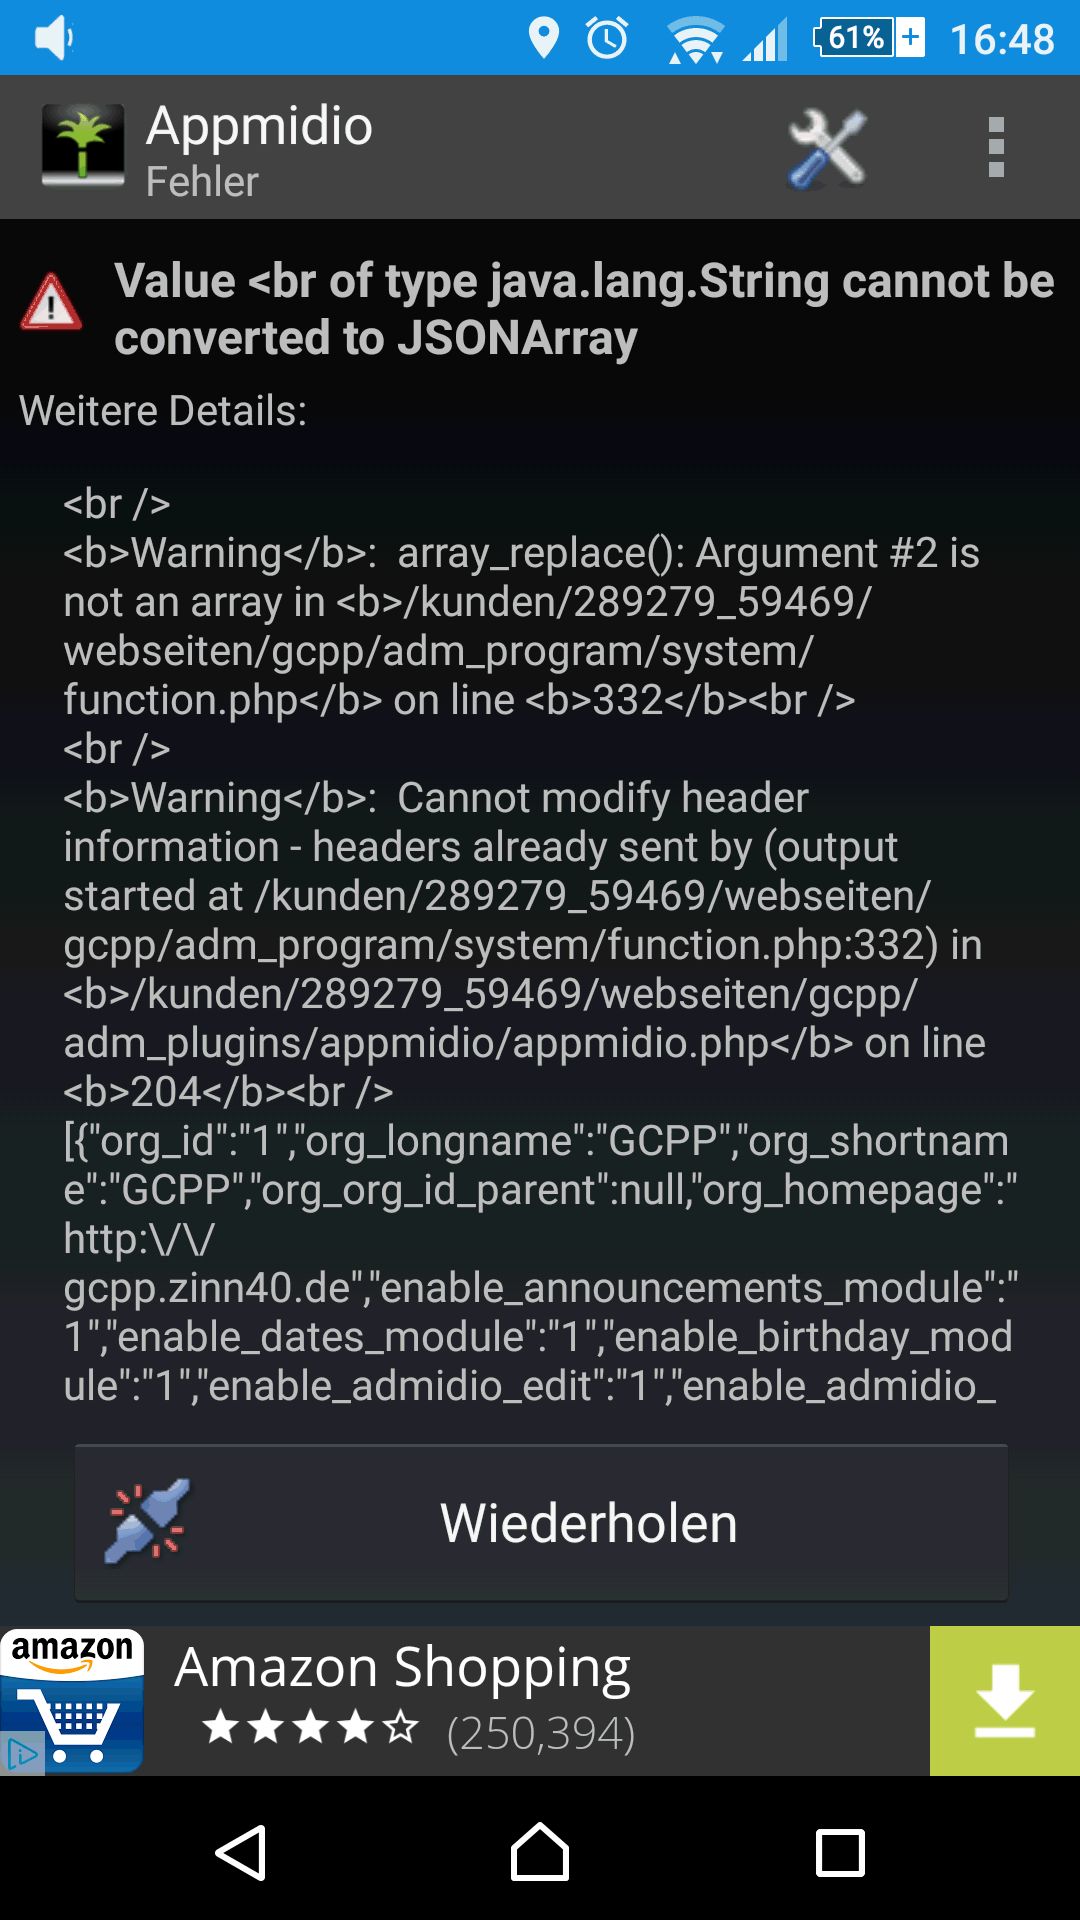 Fehlermeldung auf dem Android Smartphone